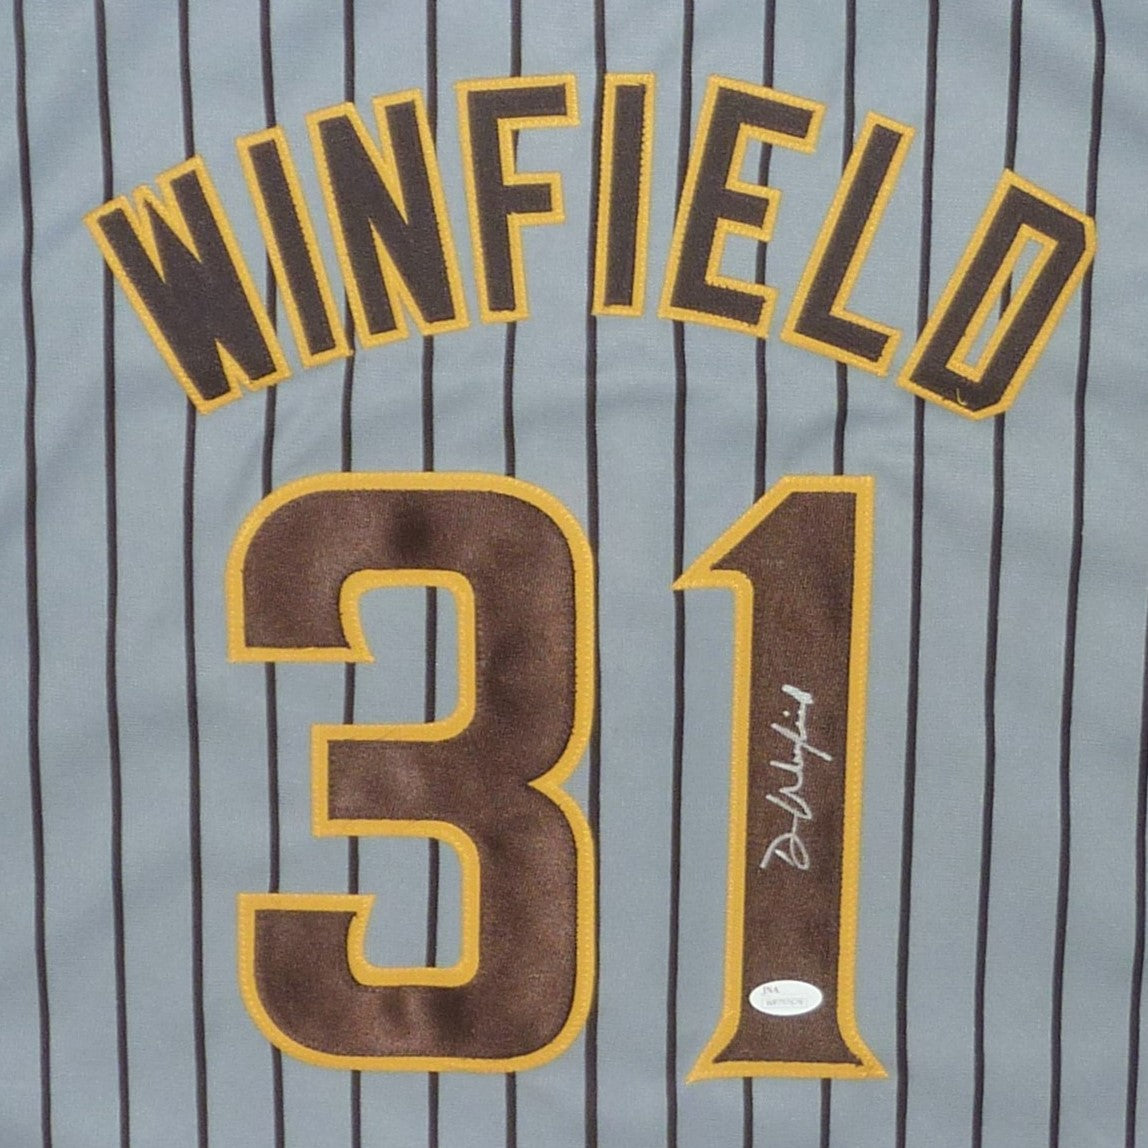 Dave Winfield Autographed San Diego (Pinstripe #31) Custom Baseball Jersey - JSA